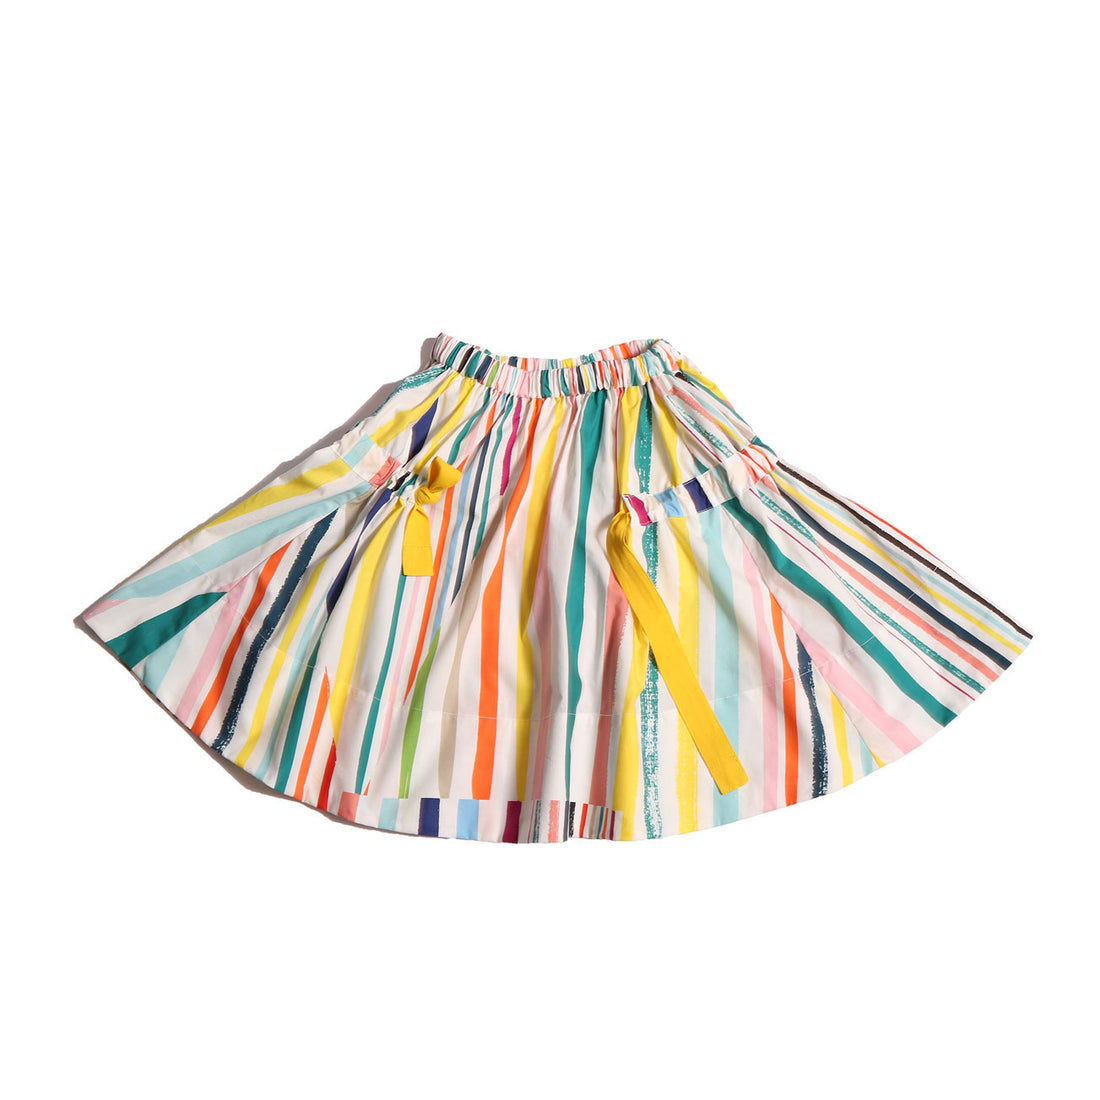 Tia Cibani Rainbow Morgan Bustled Skirt